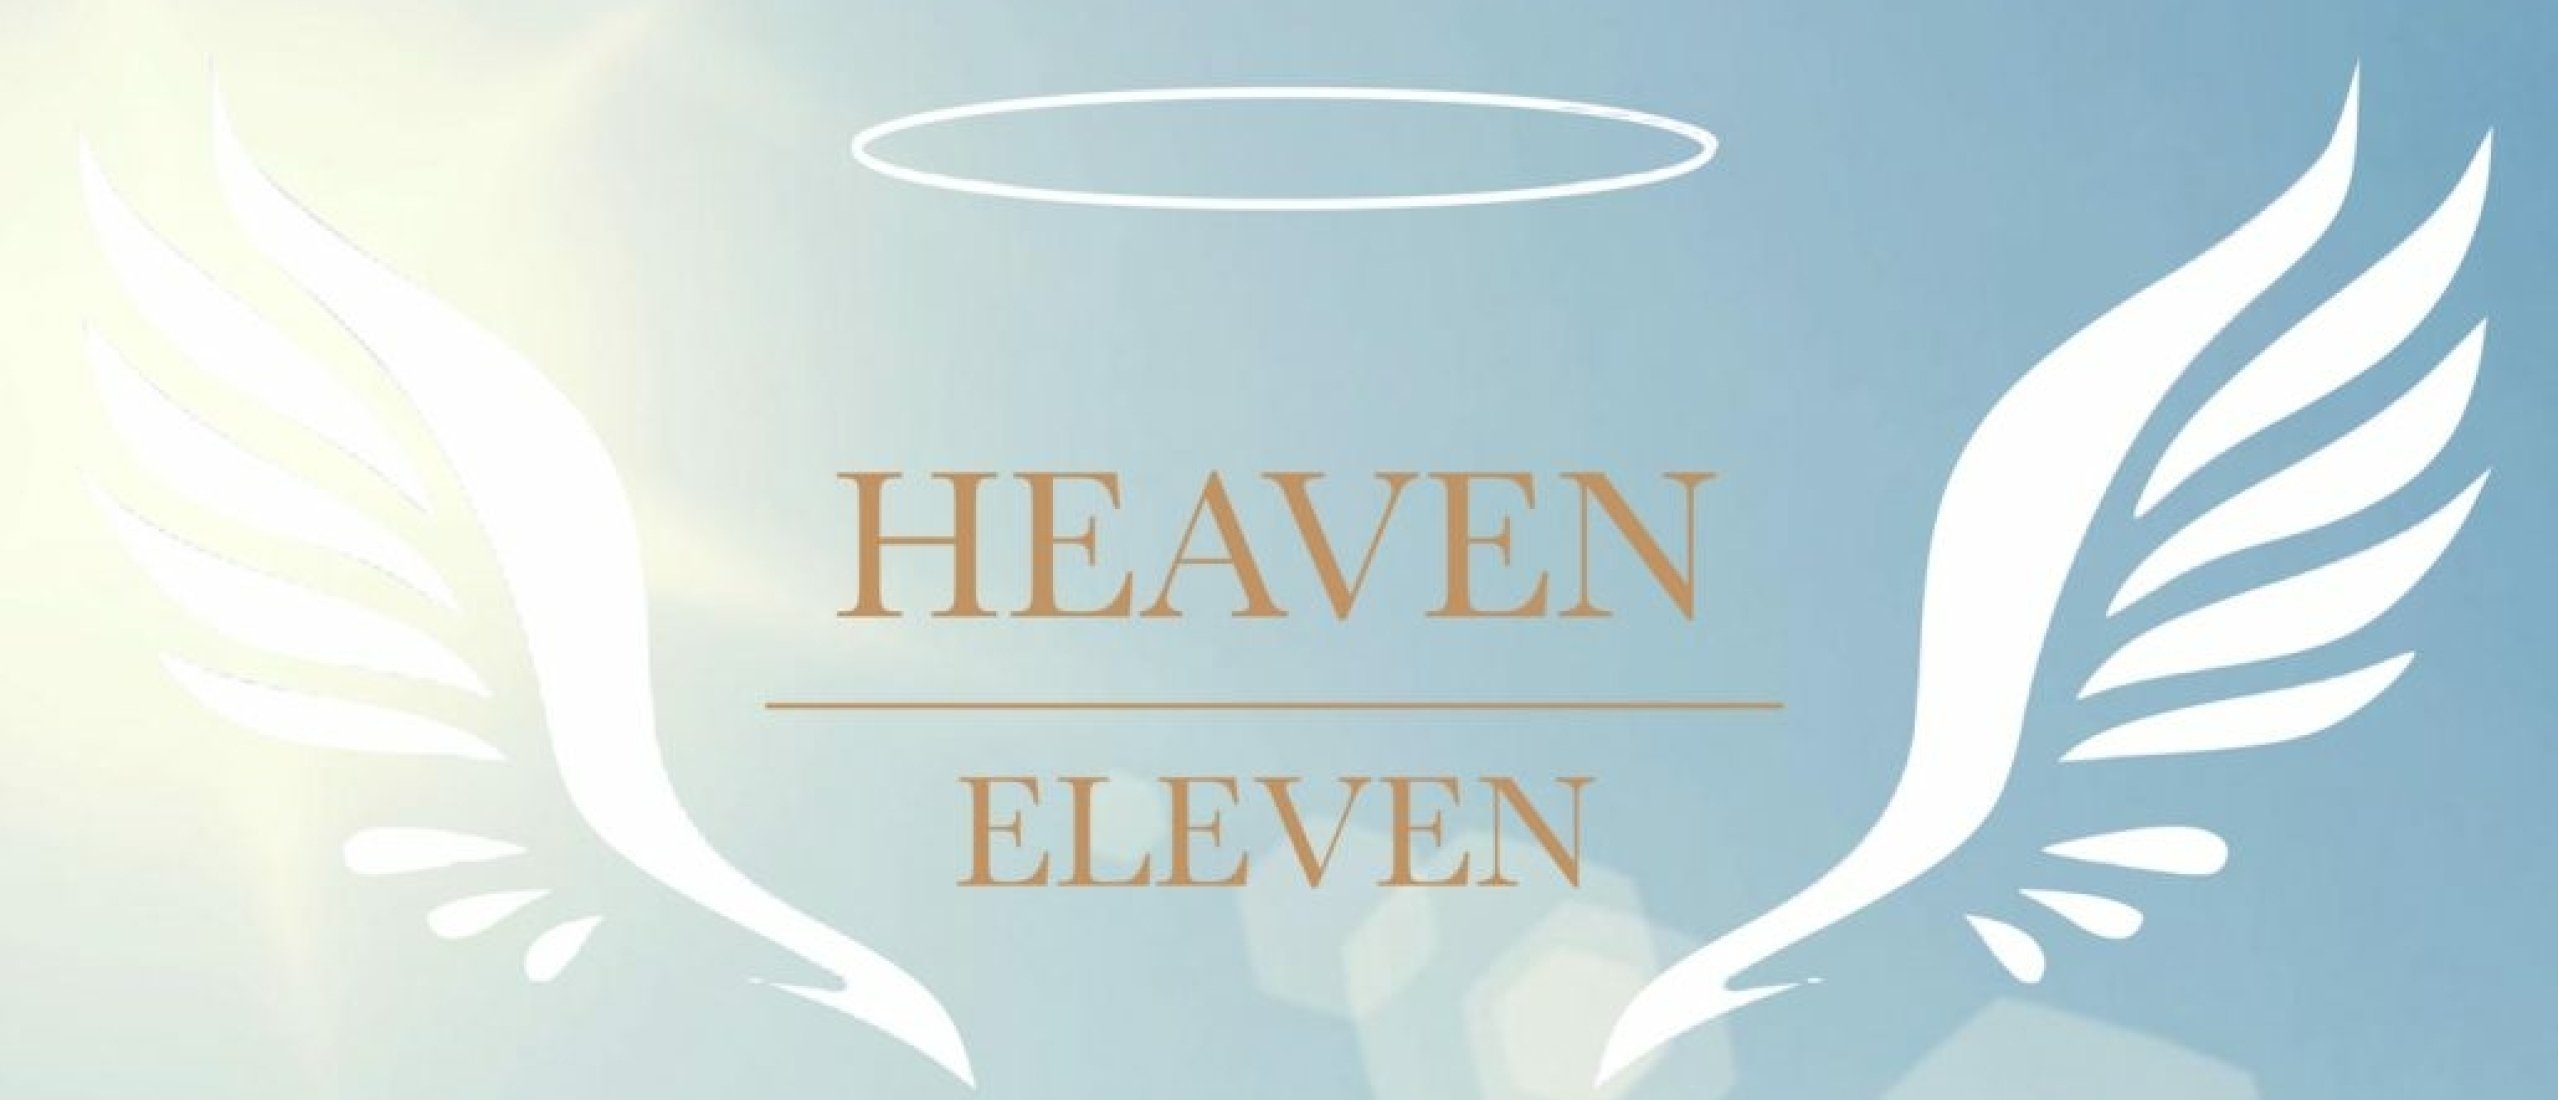 heaven eleven